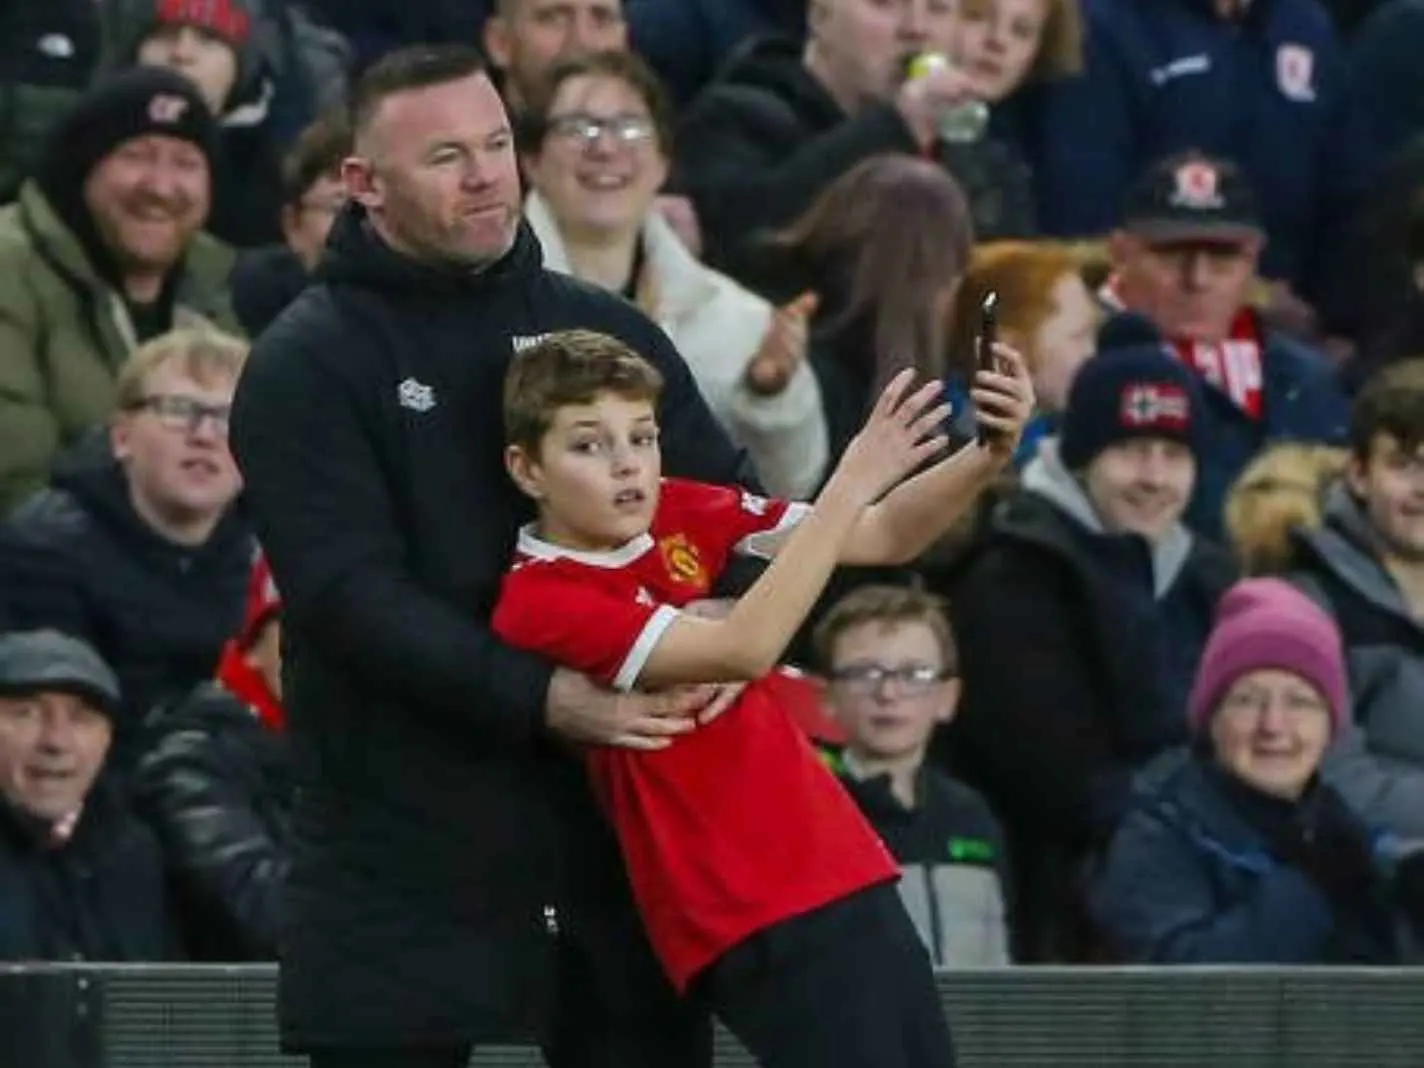 Young fan wearing Man United jersey grabs selfie with Wayne Rooney